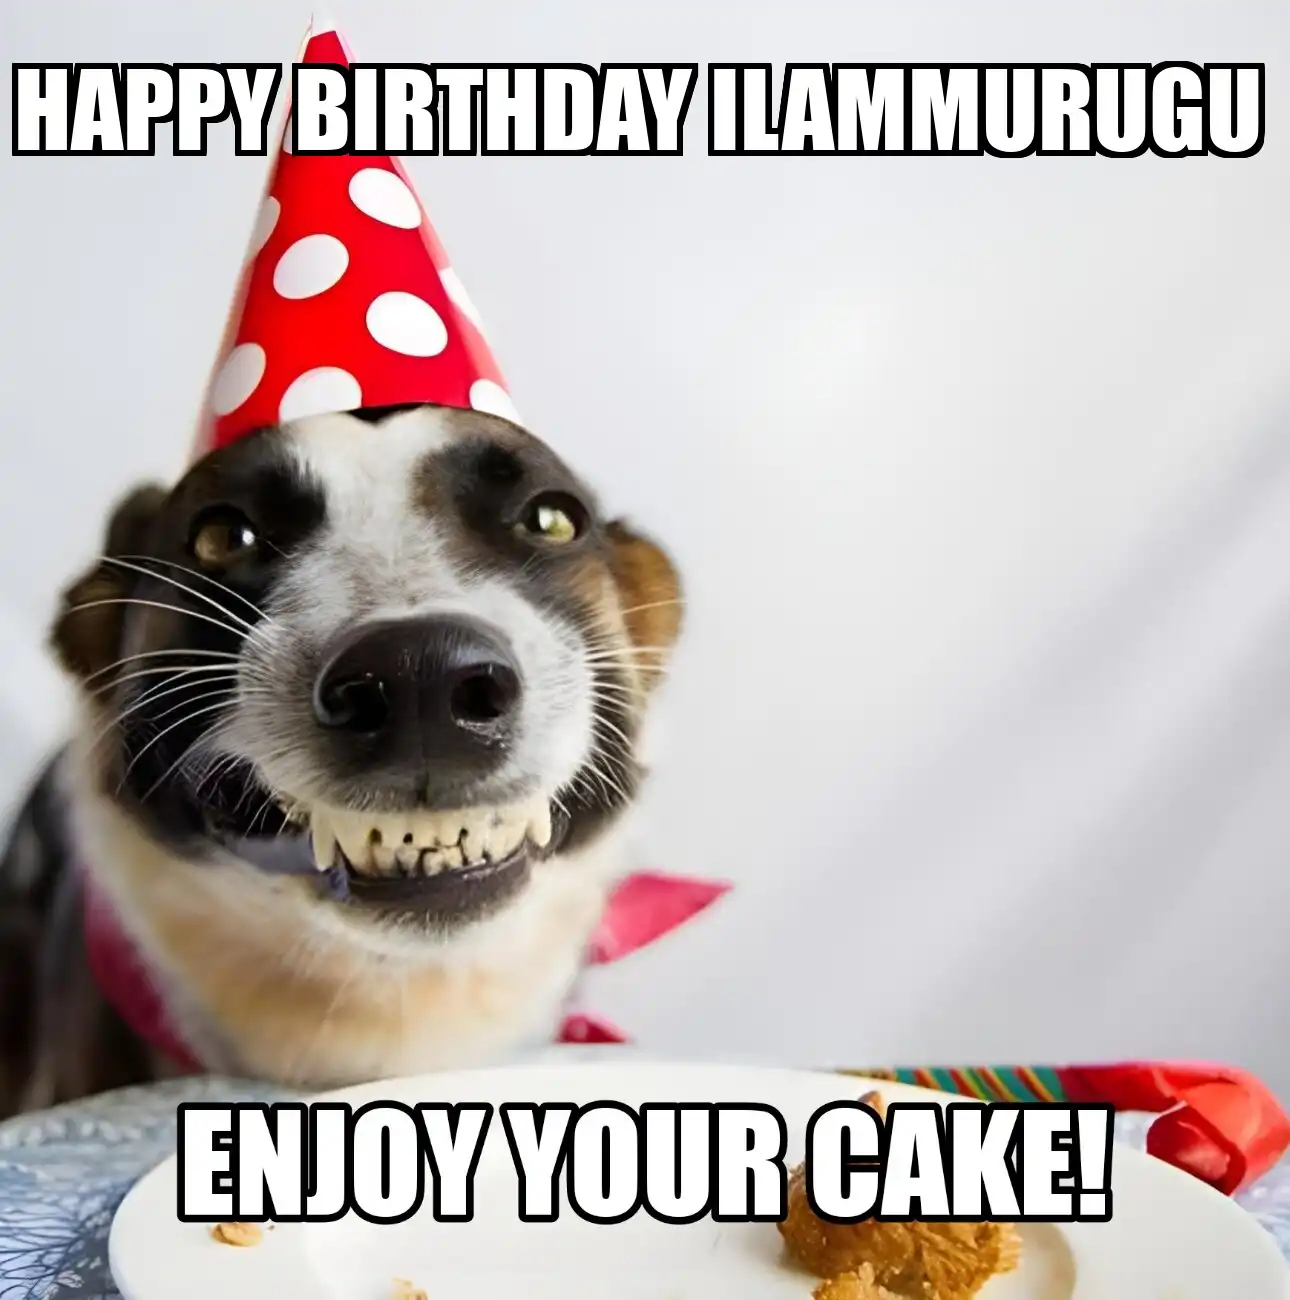 Happy Birthday Ilammurugu Enjoy Your Cake Dog Meme